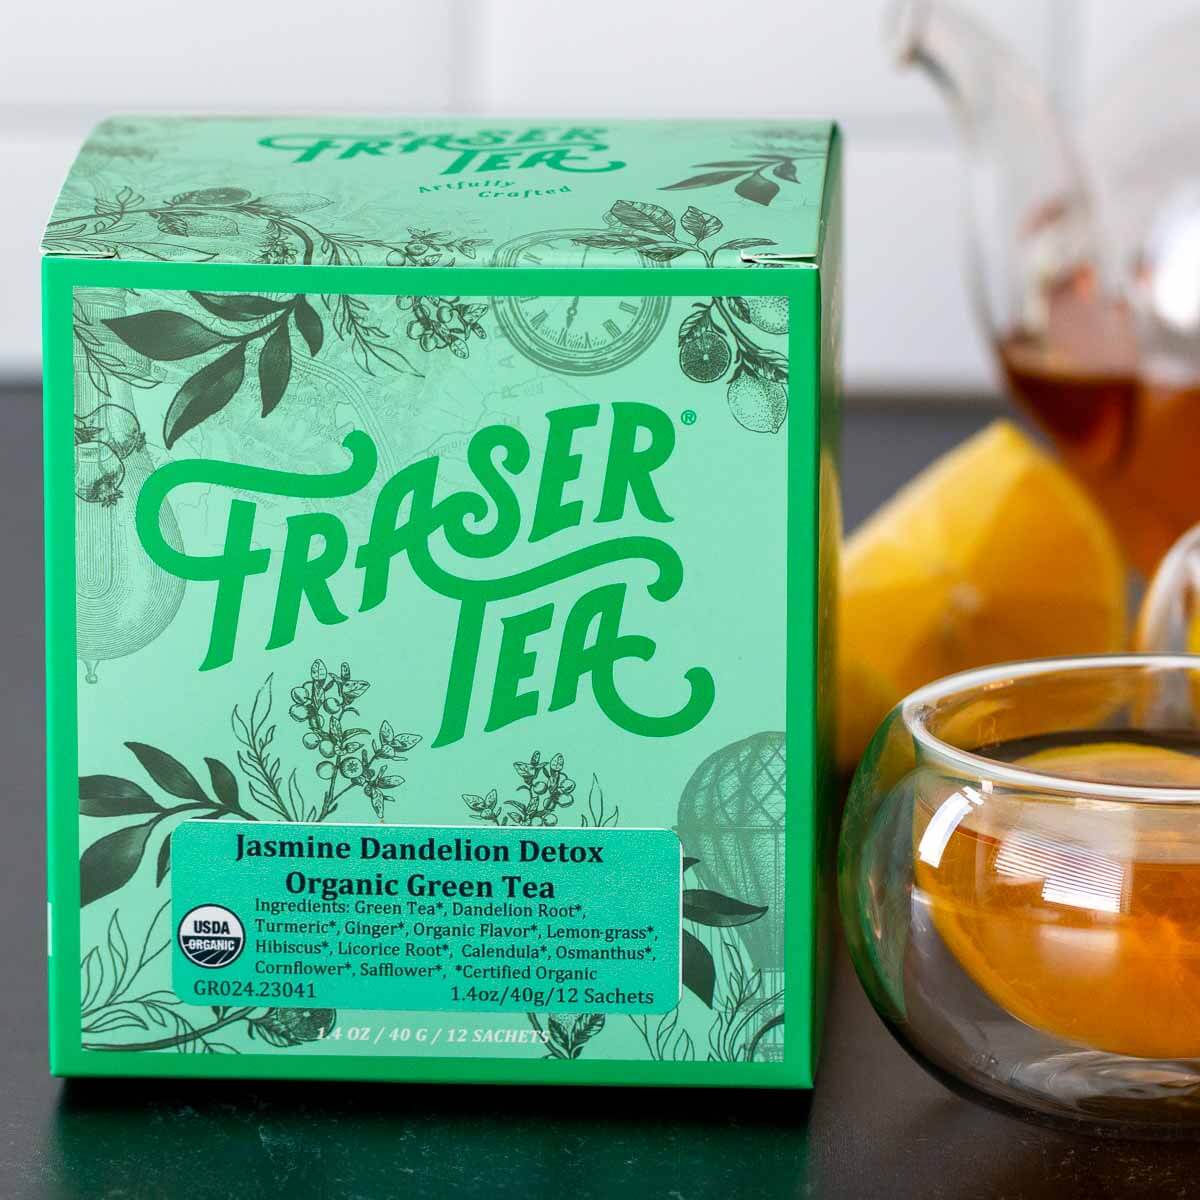 Box of Fraser Tea Jasmine Dandelion Detox Organic Green Tea with lemons and hot tea.